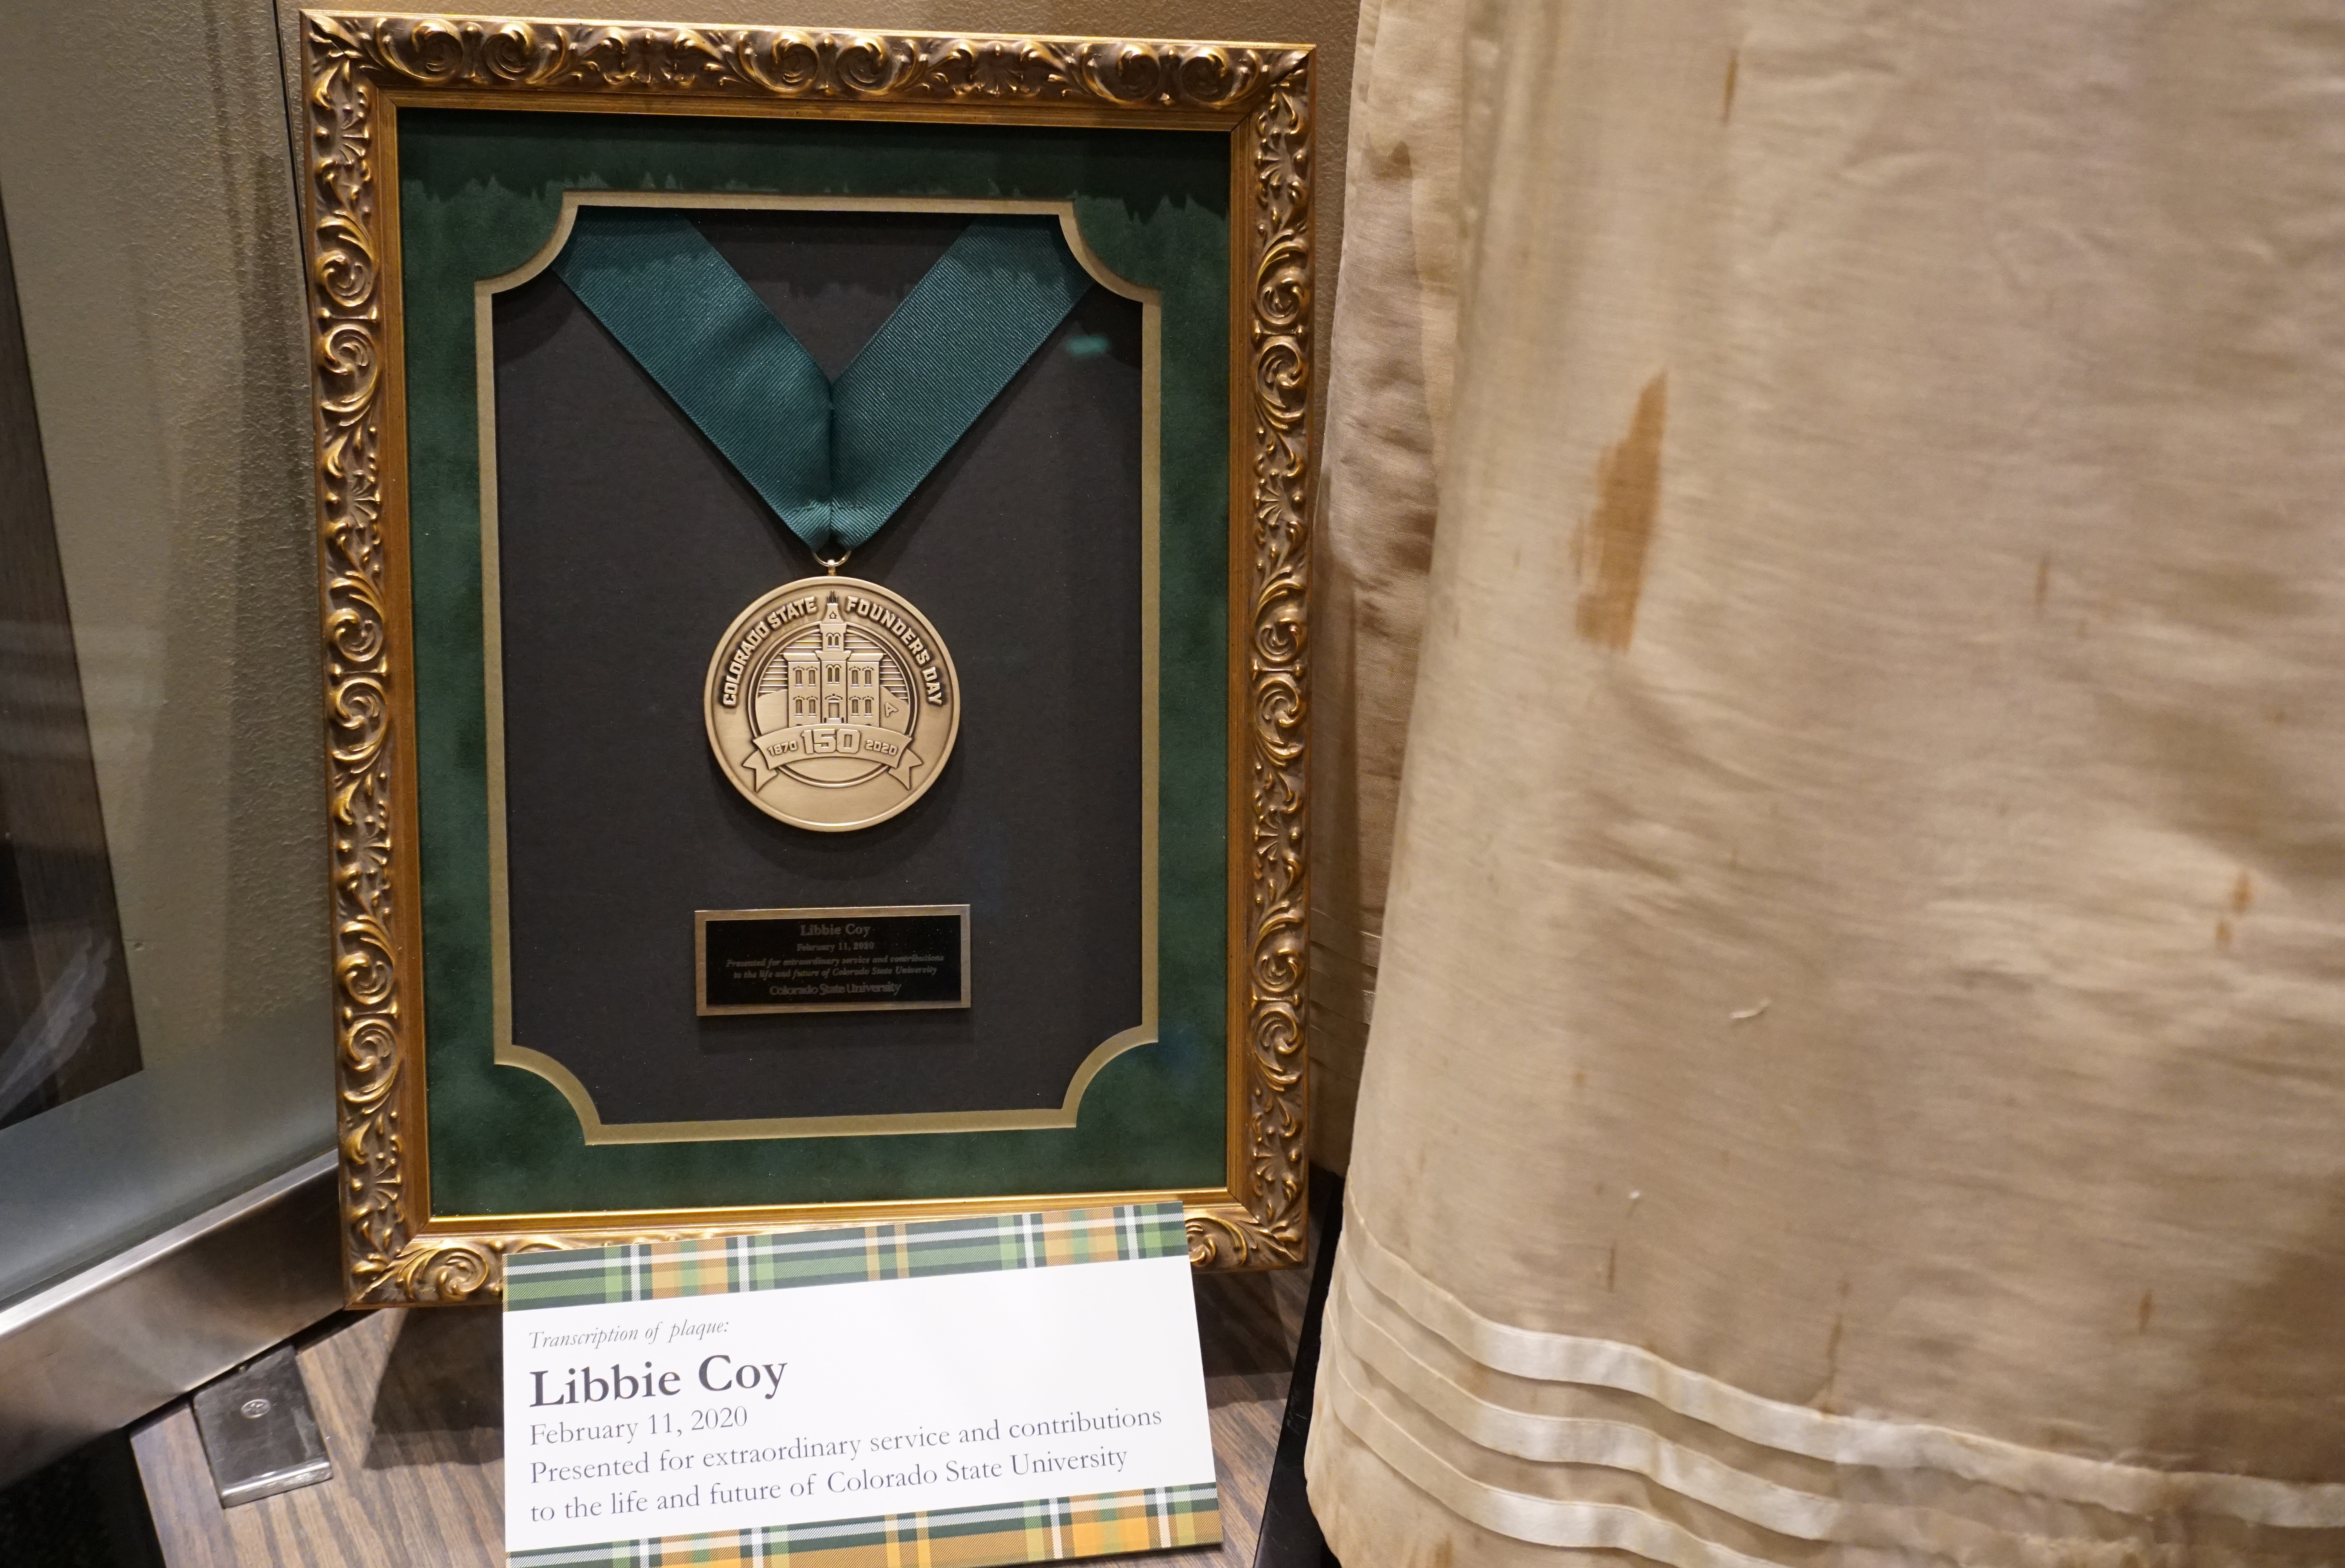 Medal awarded to Libbie Coy